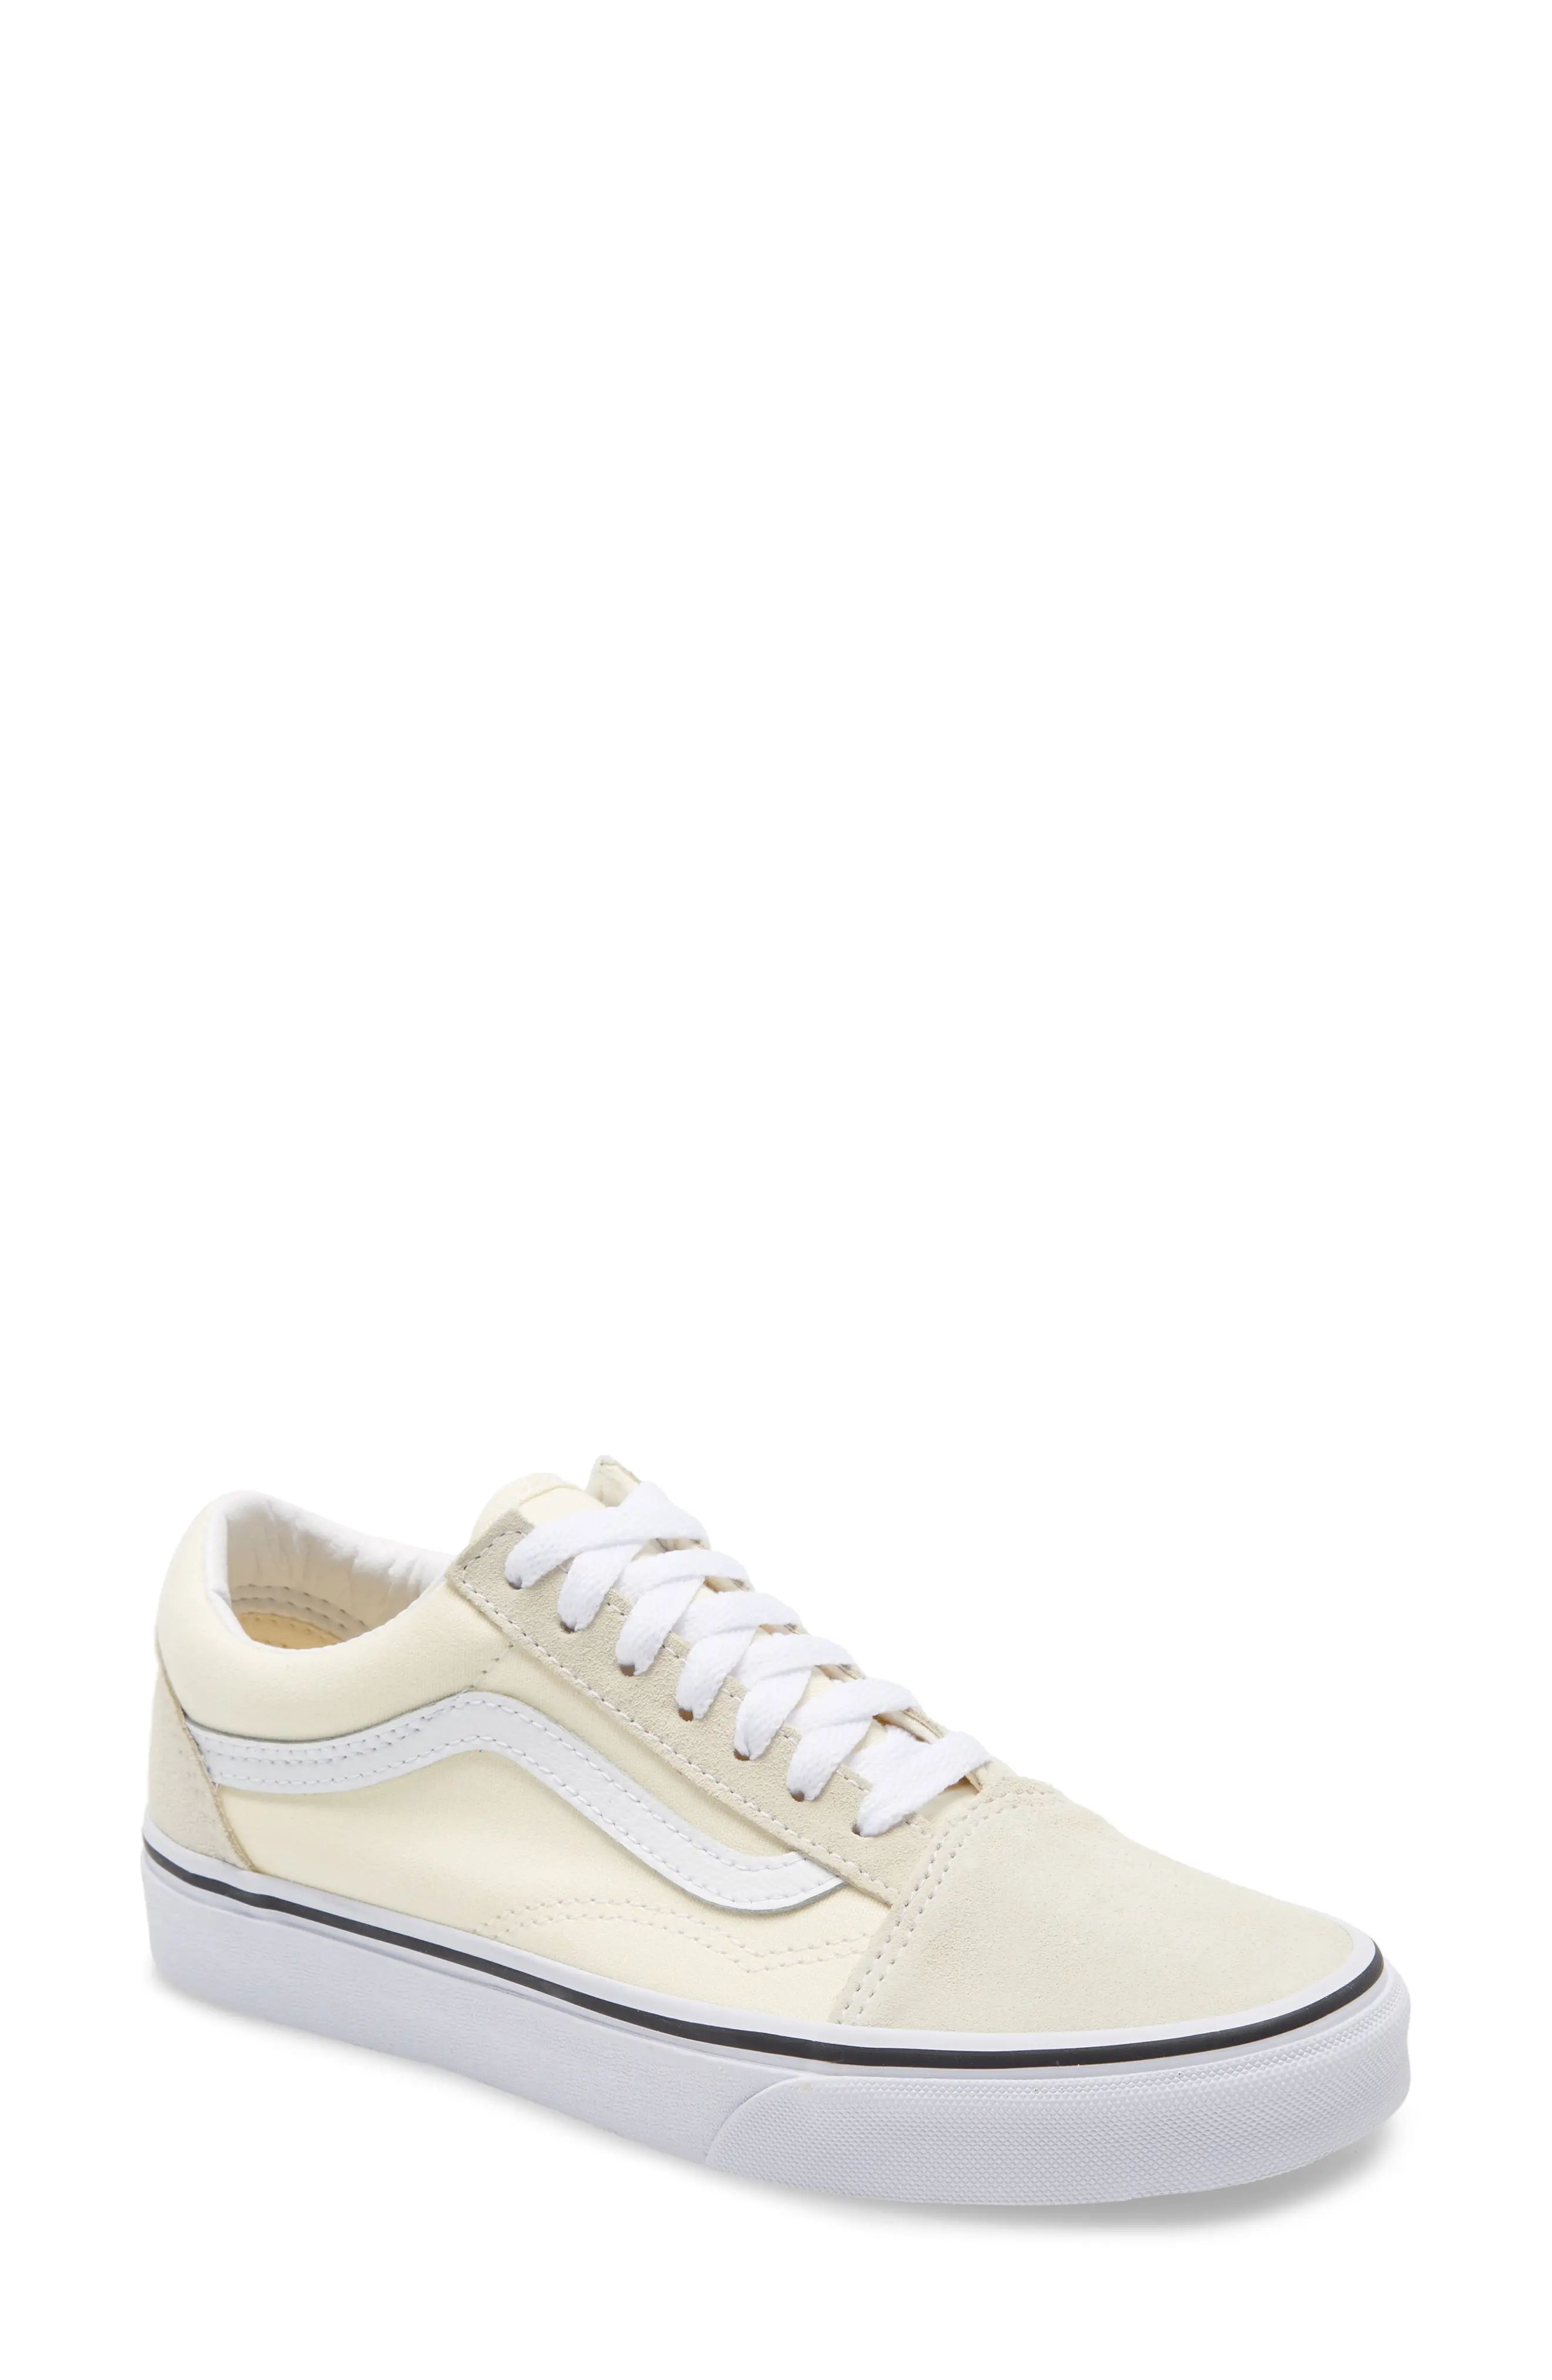 Men's Vans Old Skool Sneaker, Size 6.5 M - White | Nordstrom